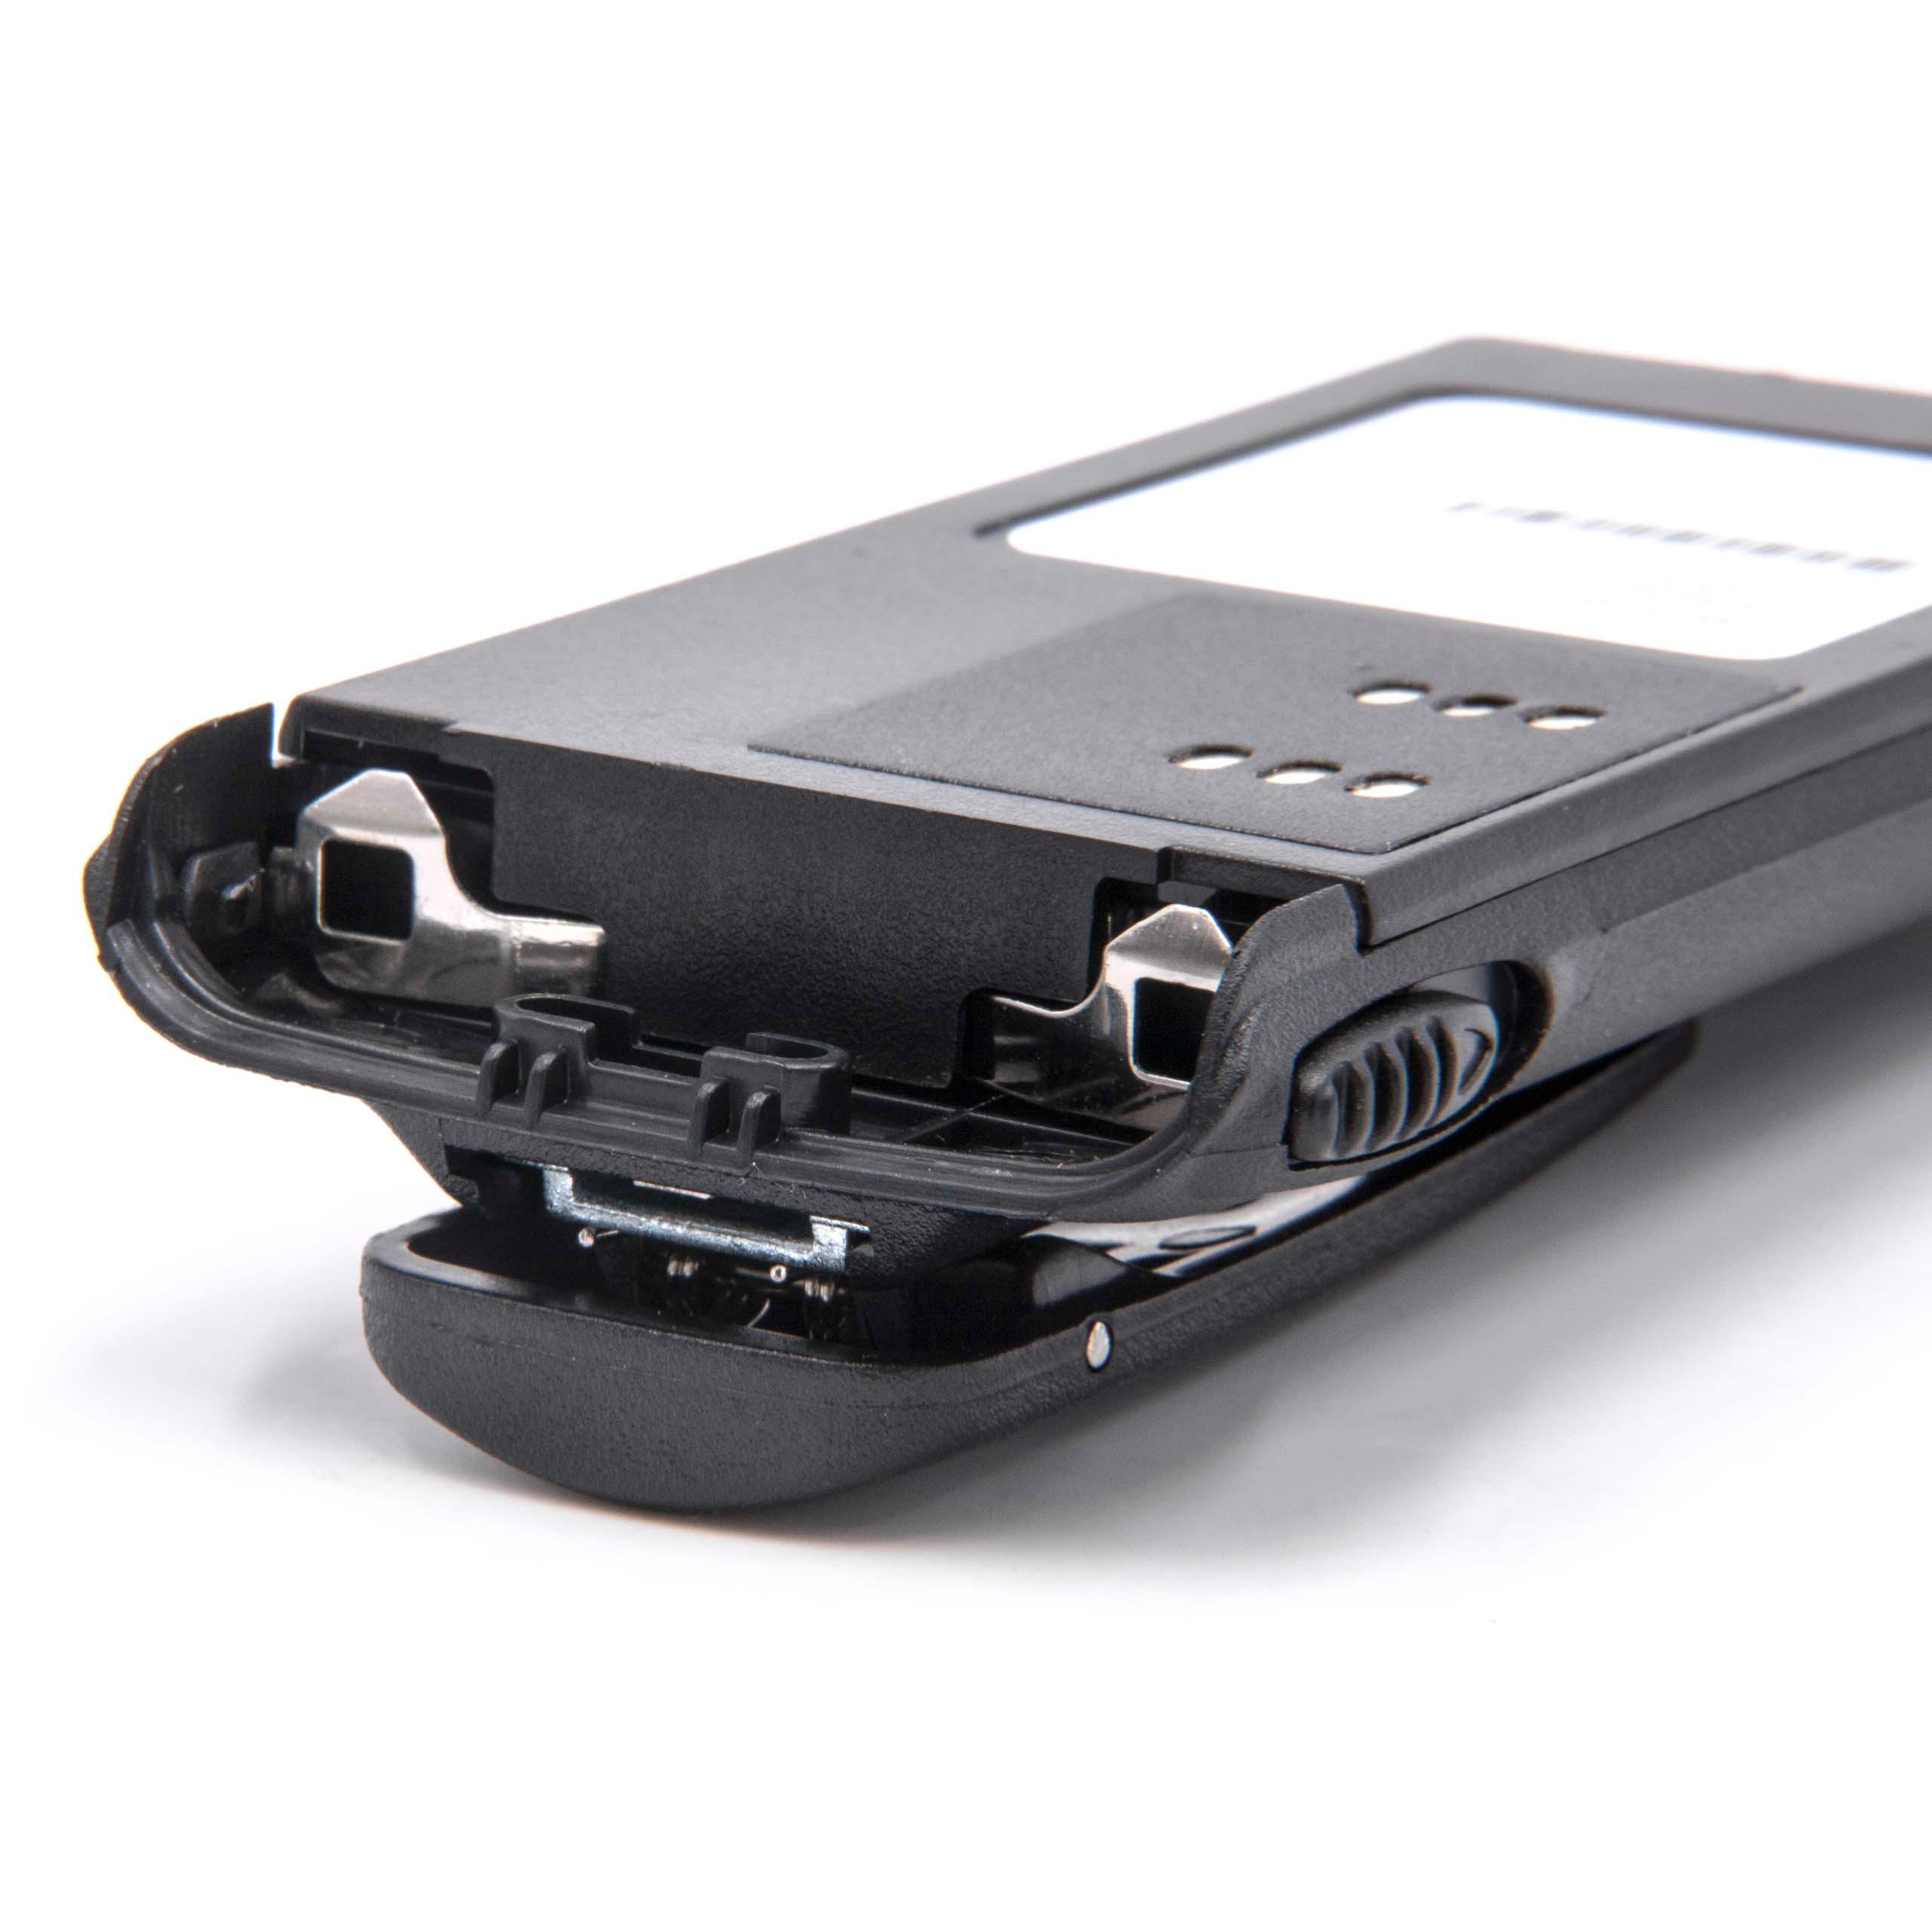 Batterie remplace Motorola HMNN4151, HMNN4154, HMNN4158, HMNN4159 pour radio talkie-walkie - 2100mAh 7,2V NiMH